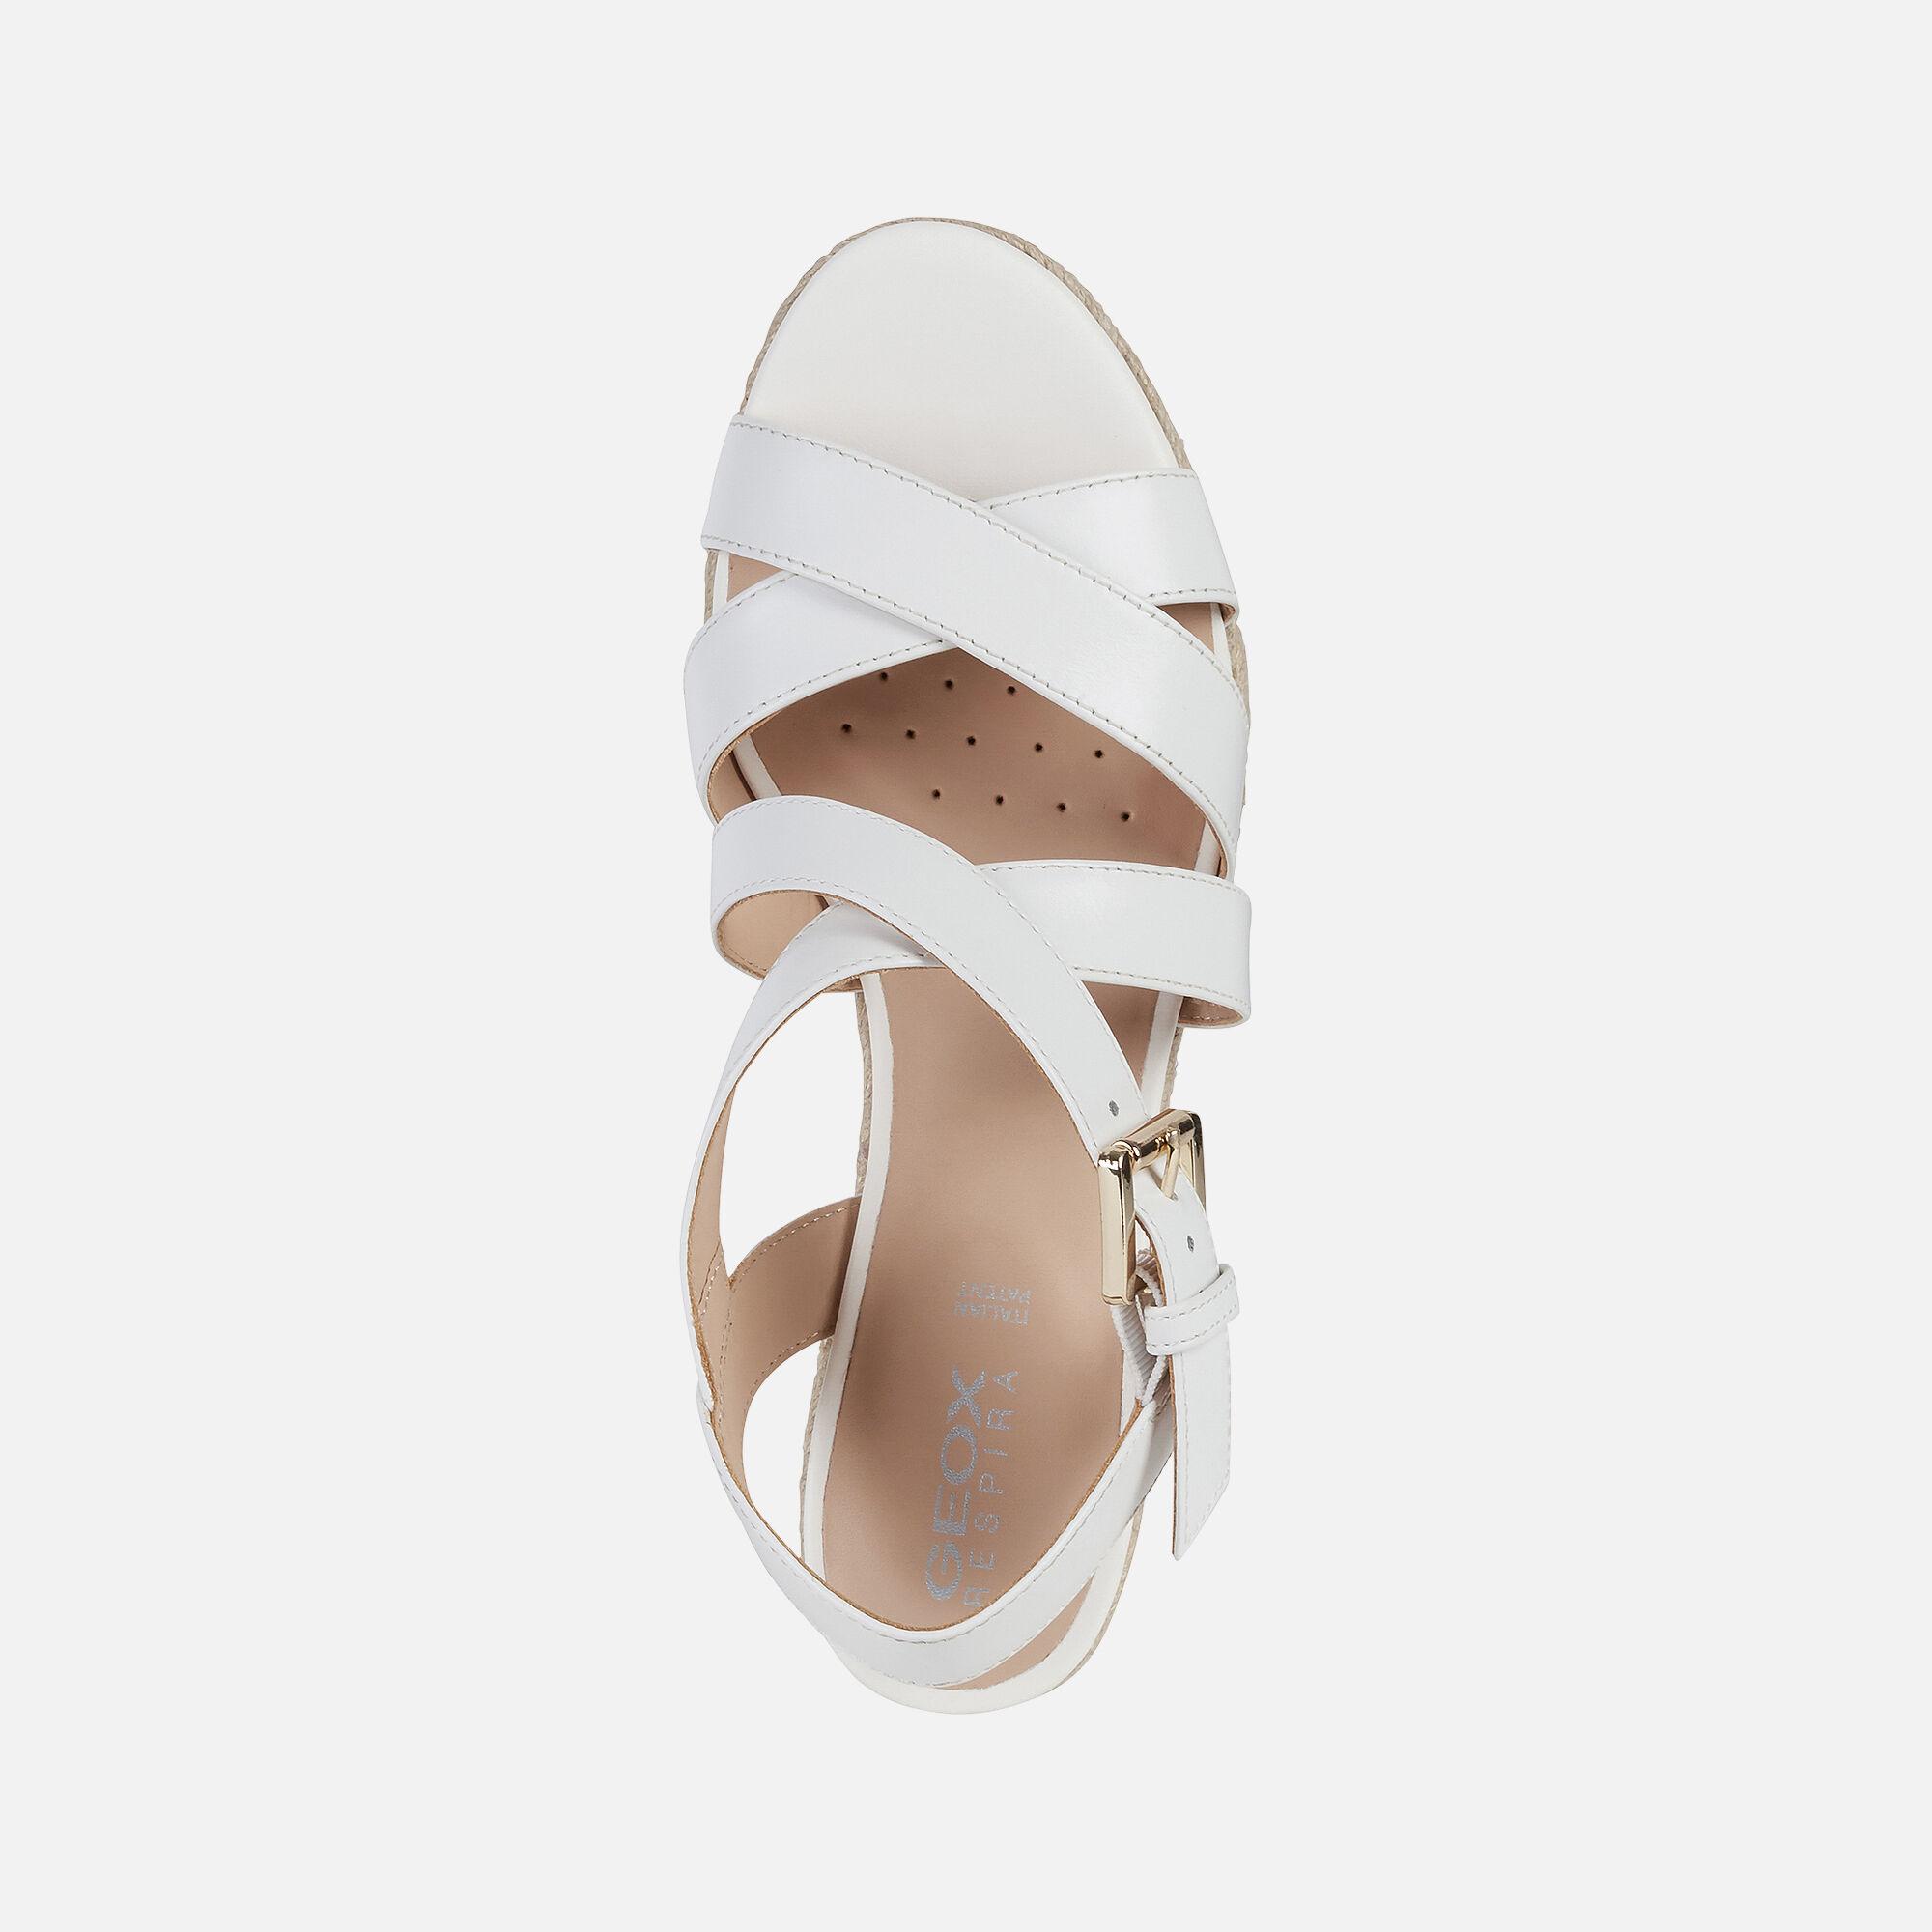 Geox PONZA Woman: White Sandals | Geox ® SS 20